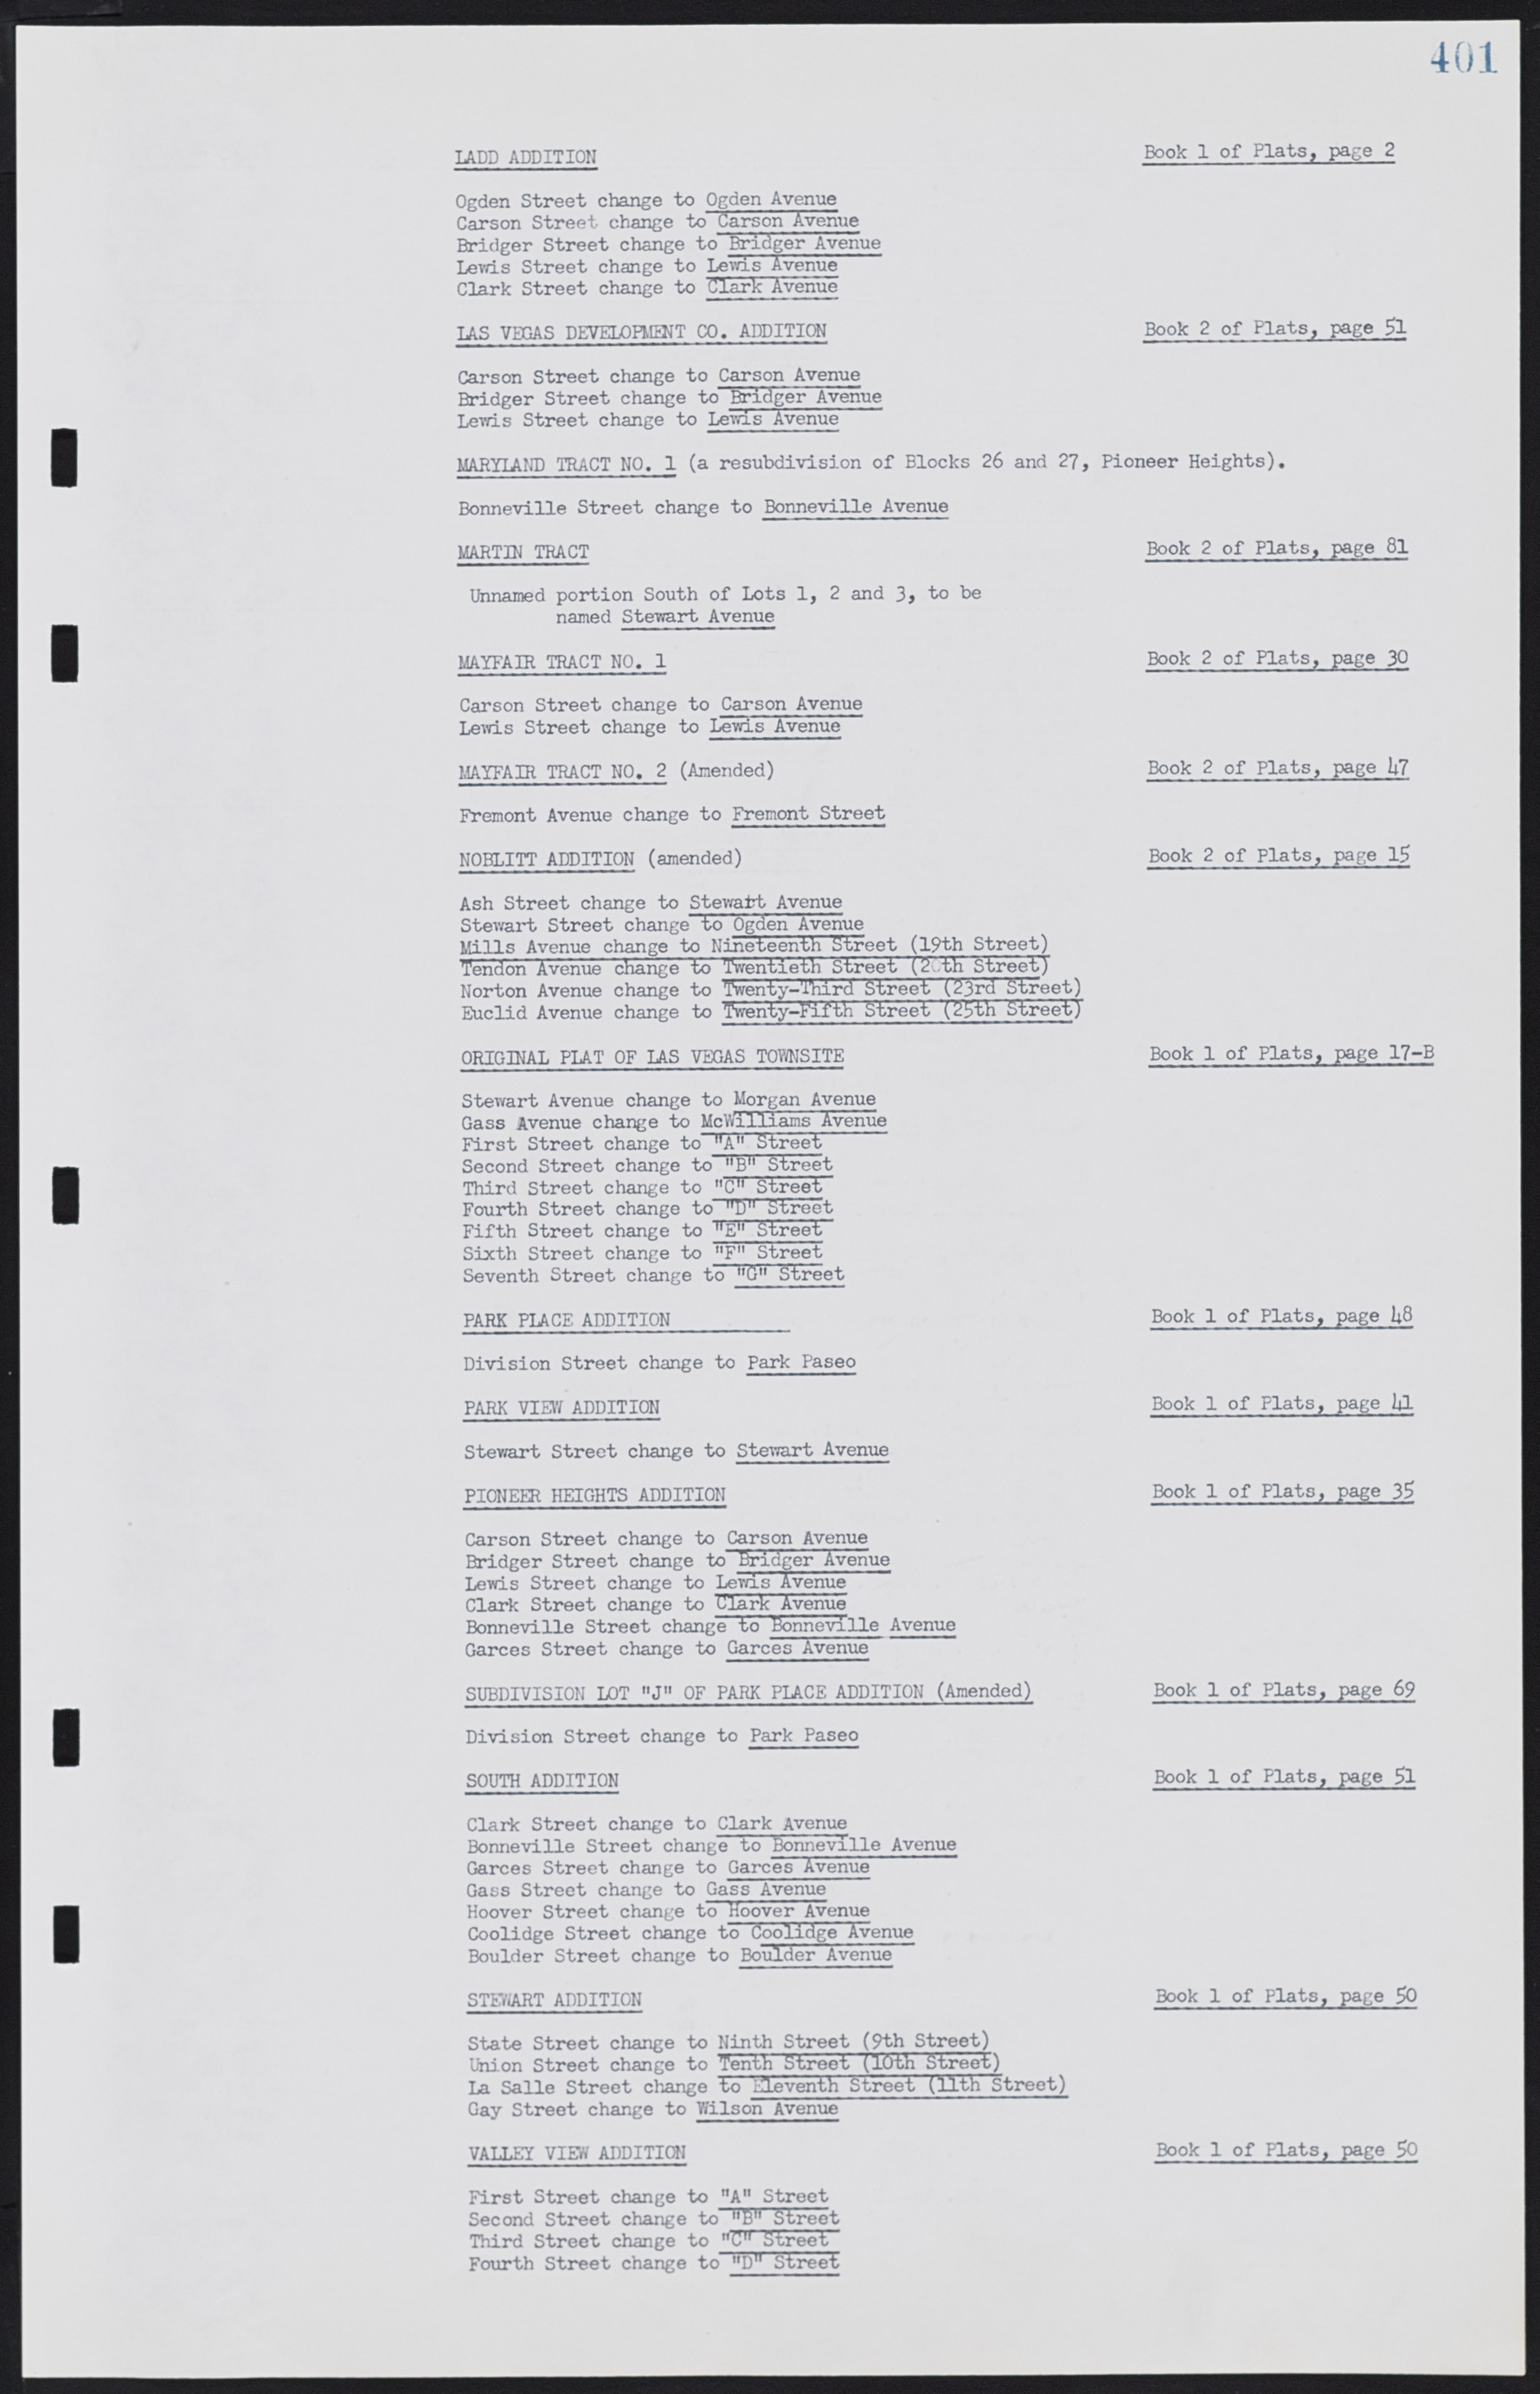 Las Vegas City Commission Minutes, January 7, 1947 to October 26, 1949, lvc000006-431